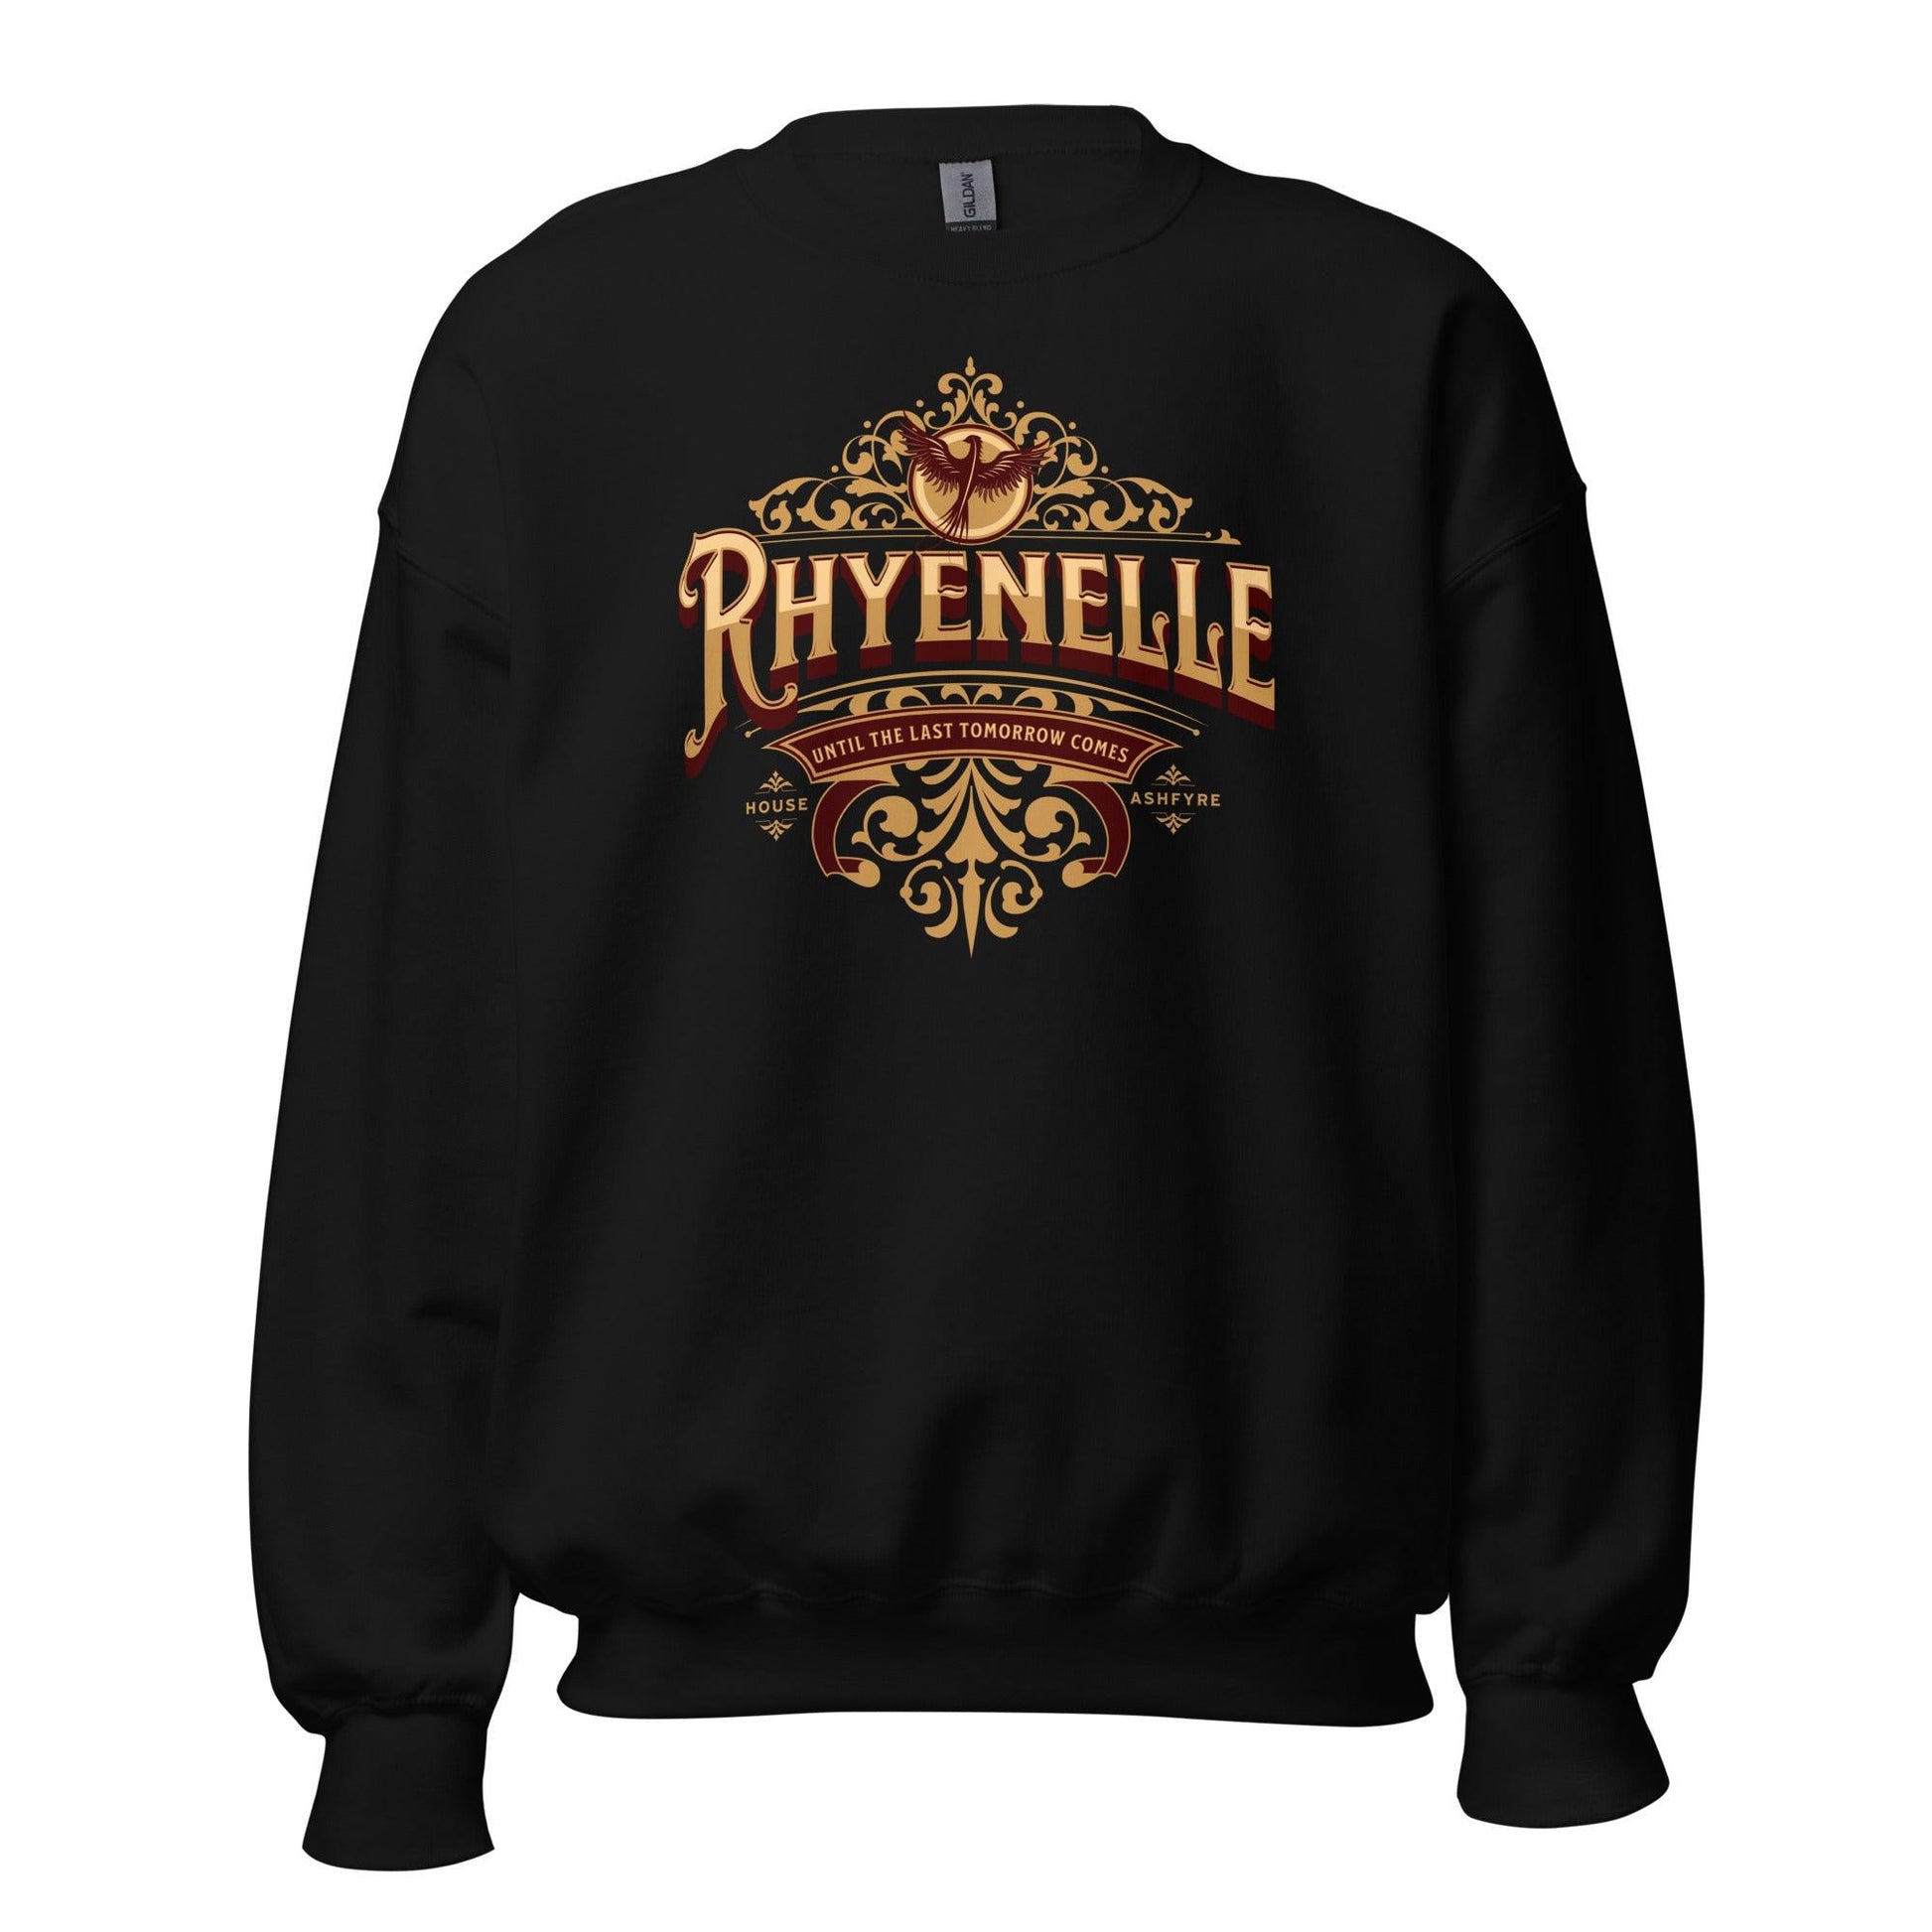 Rhyenelle Sweatshirt - The Bean Workshop - ahctr, Chloe C. Peñaranda, sweatshirt